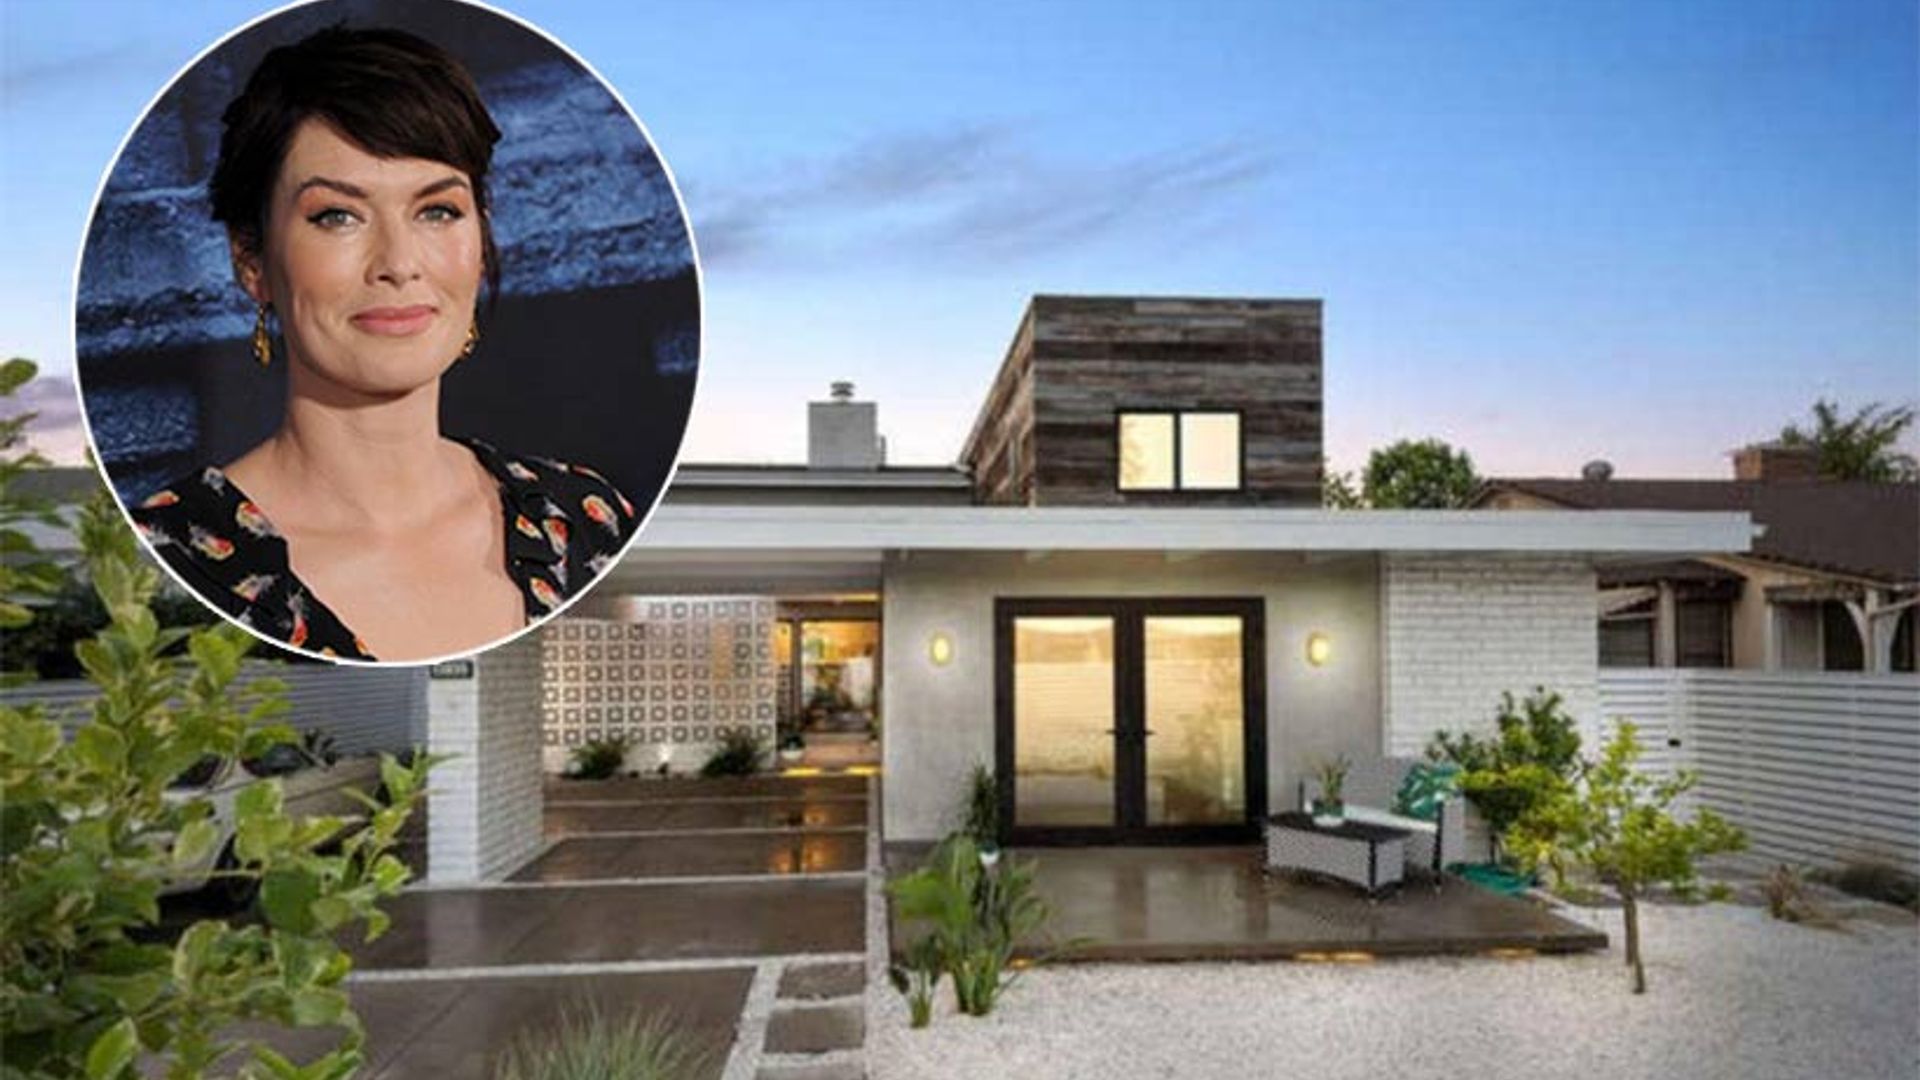 Take a look inside Game of Thrones star Lena Headey's California home